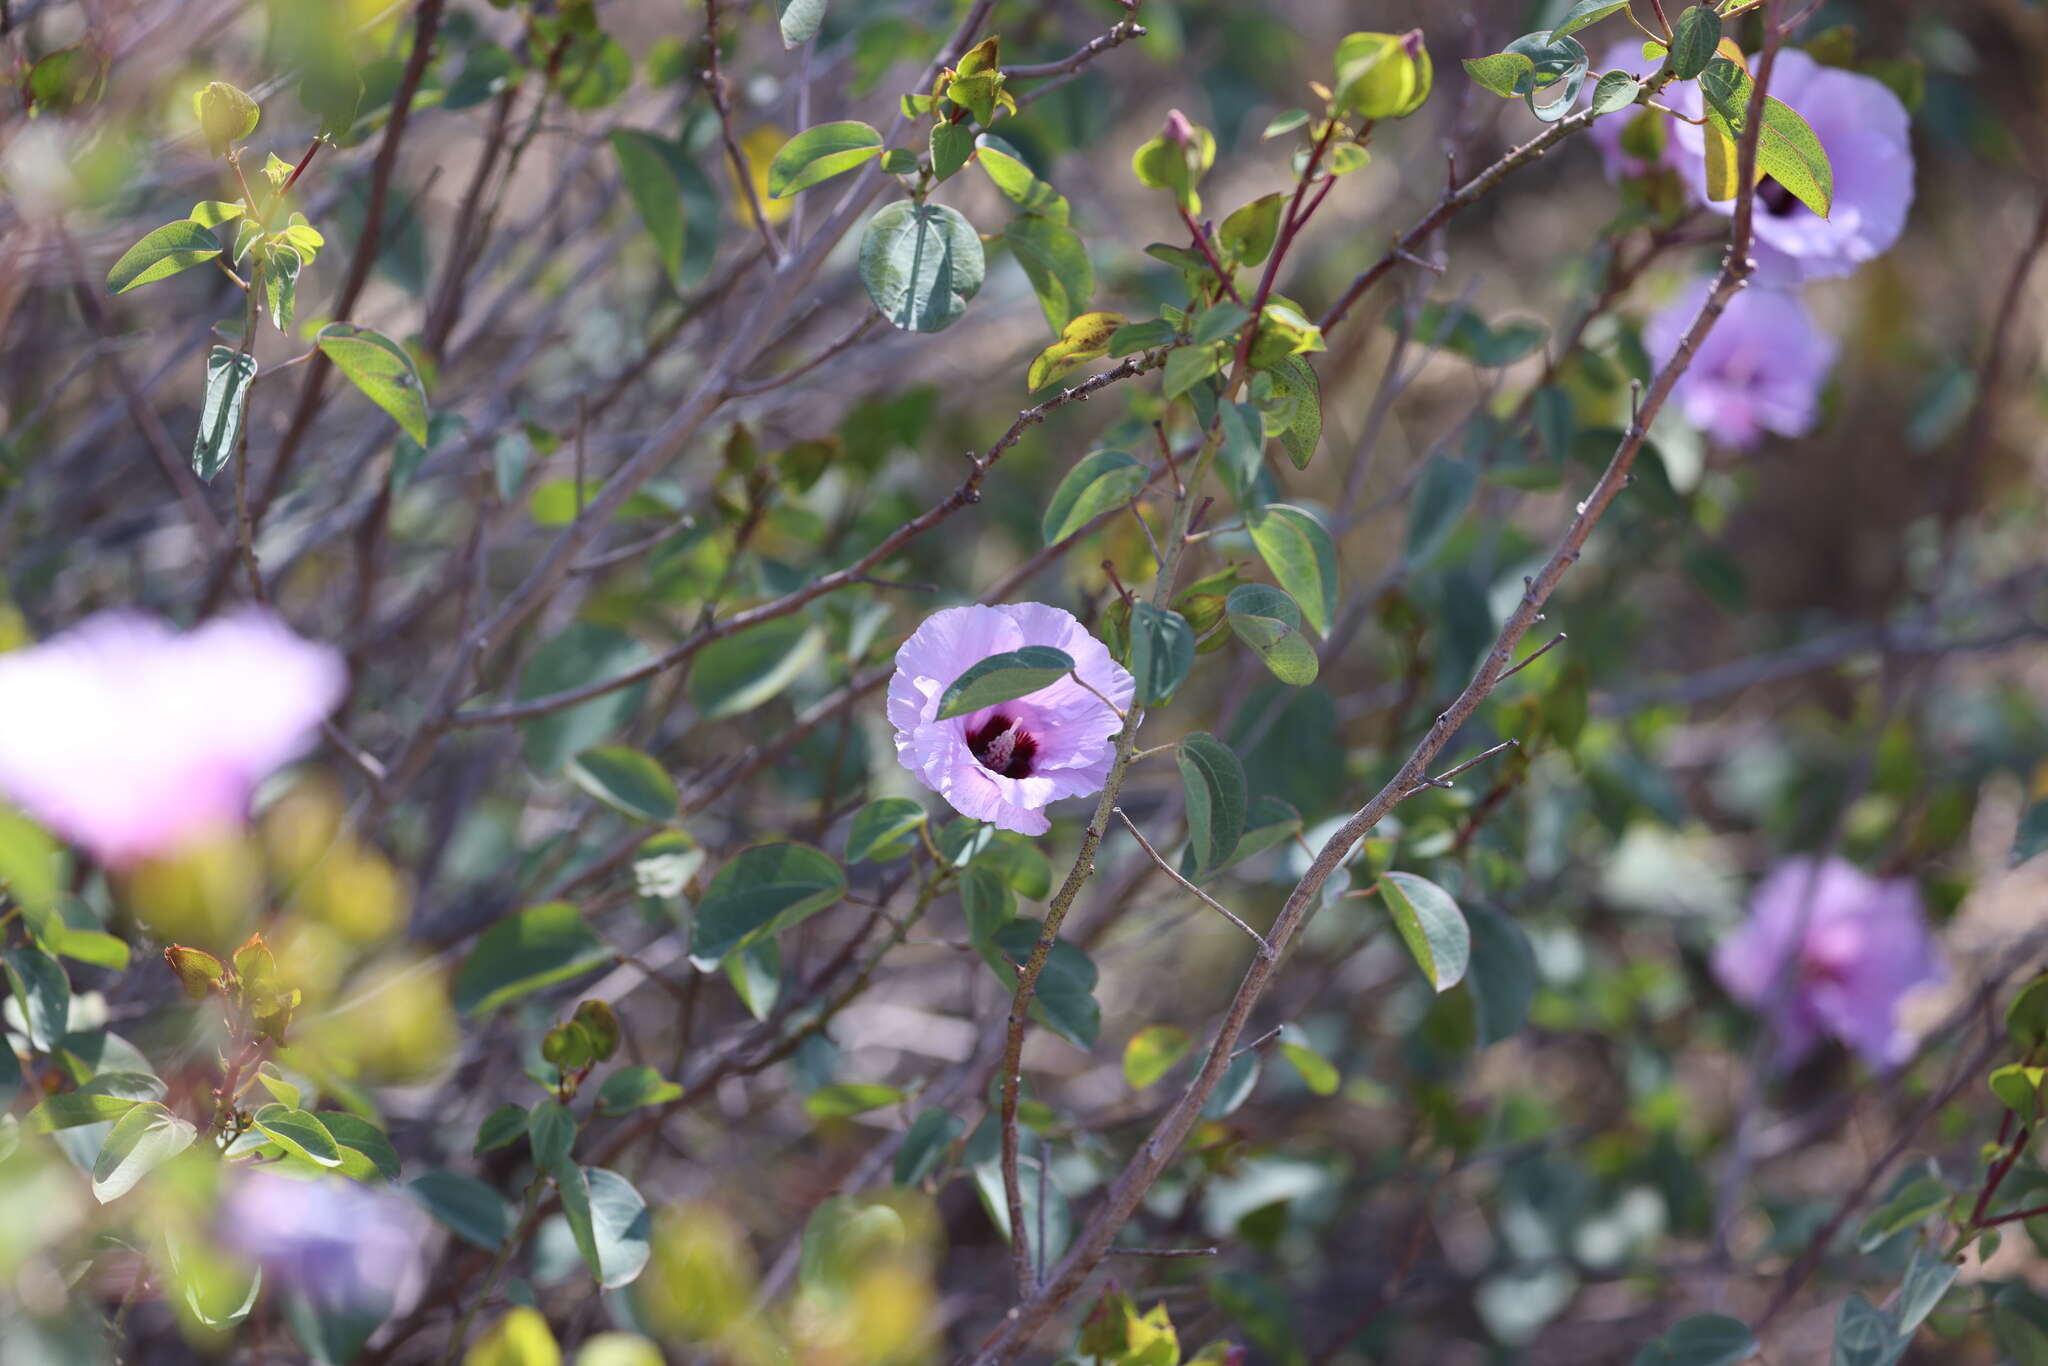 Image of Sturt's desert rose